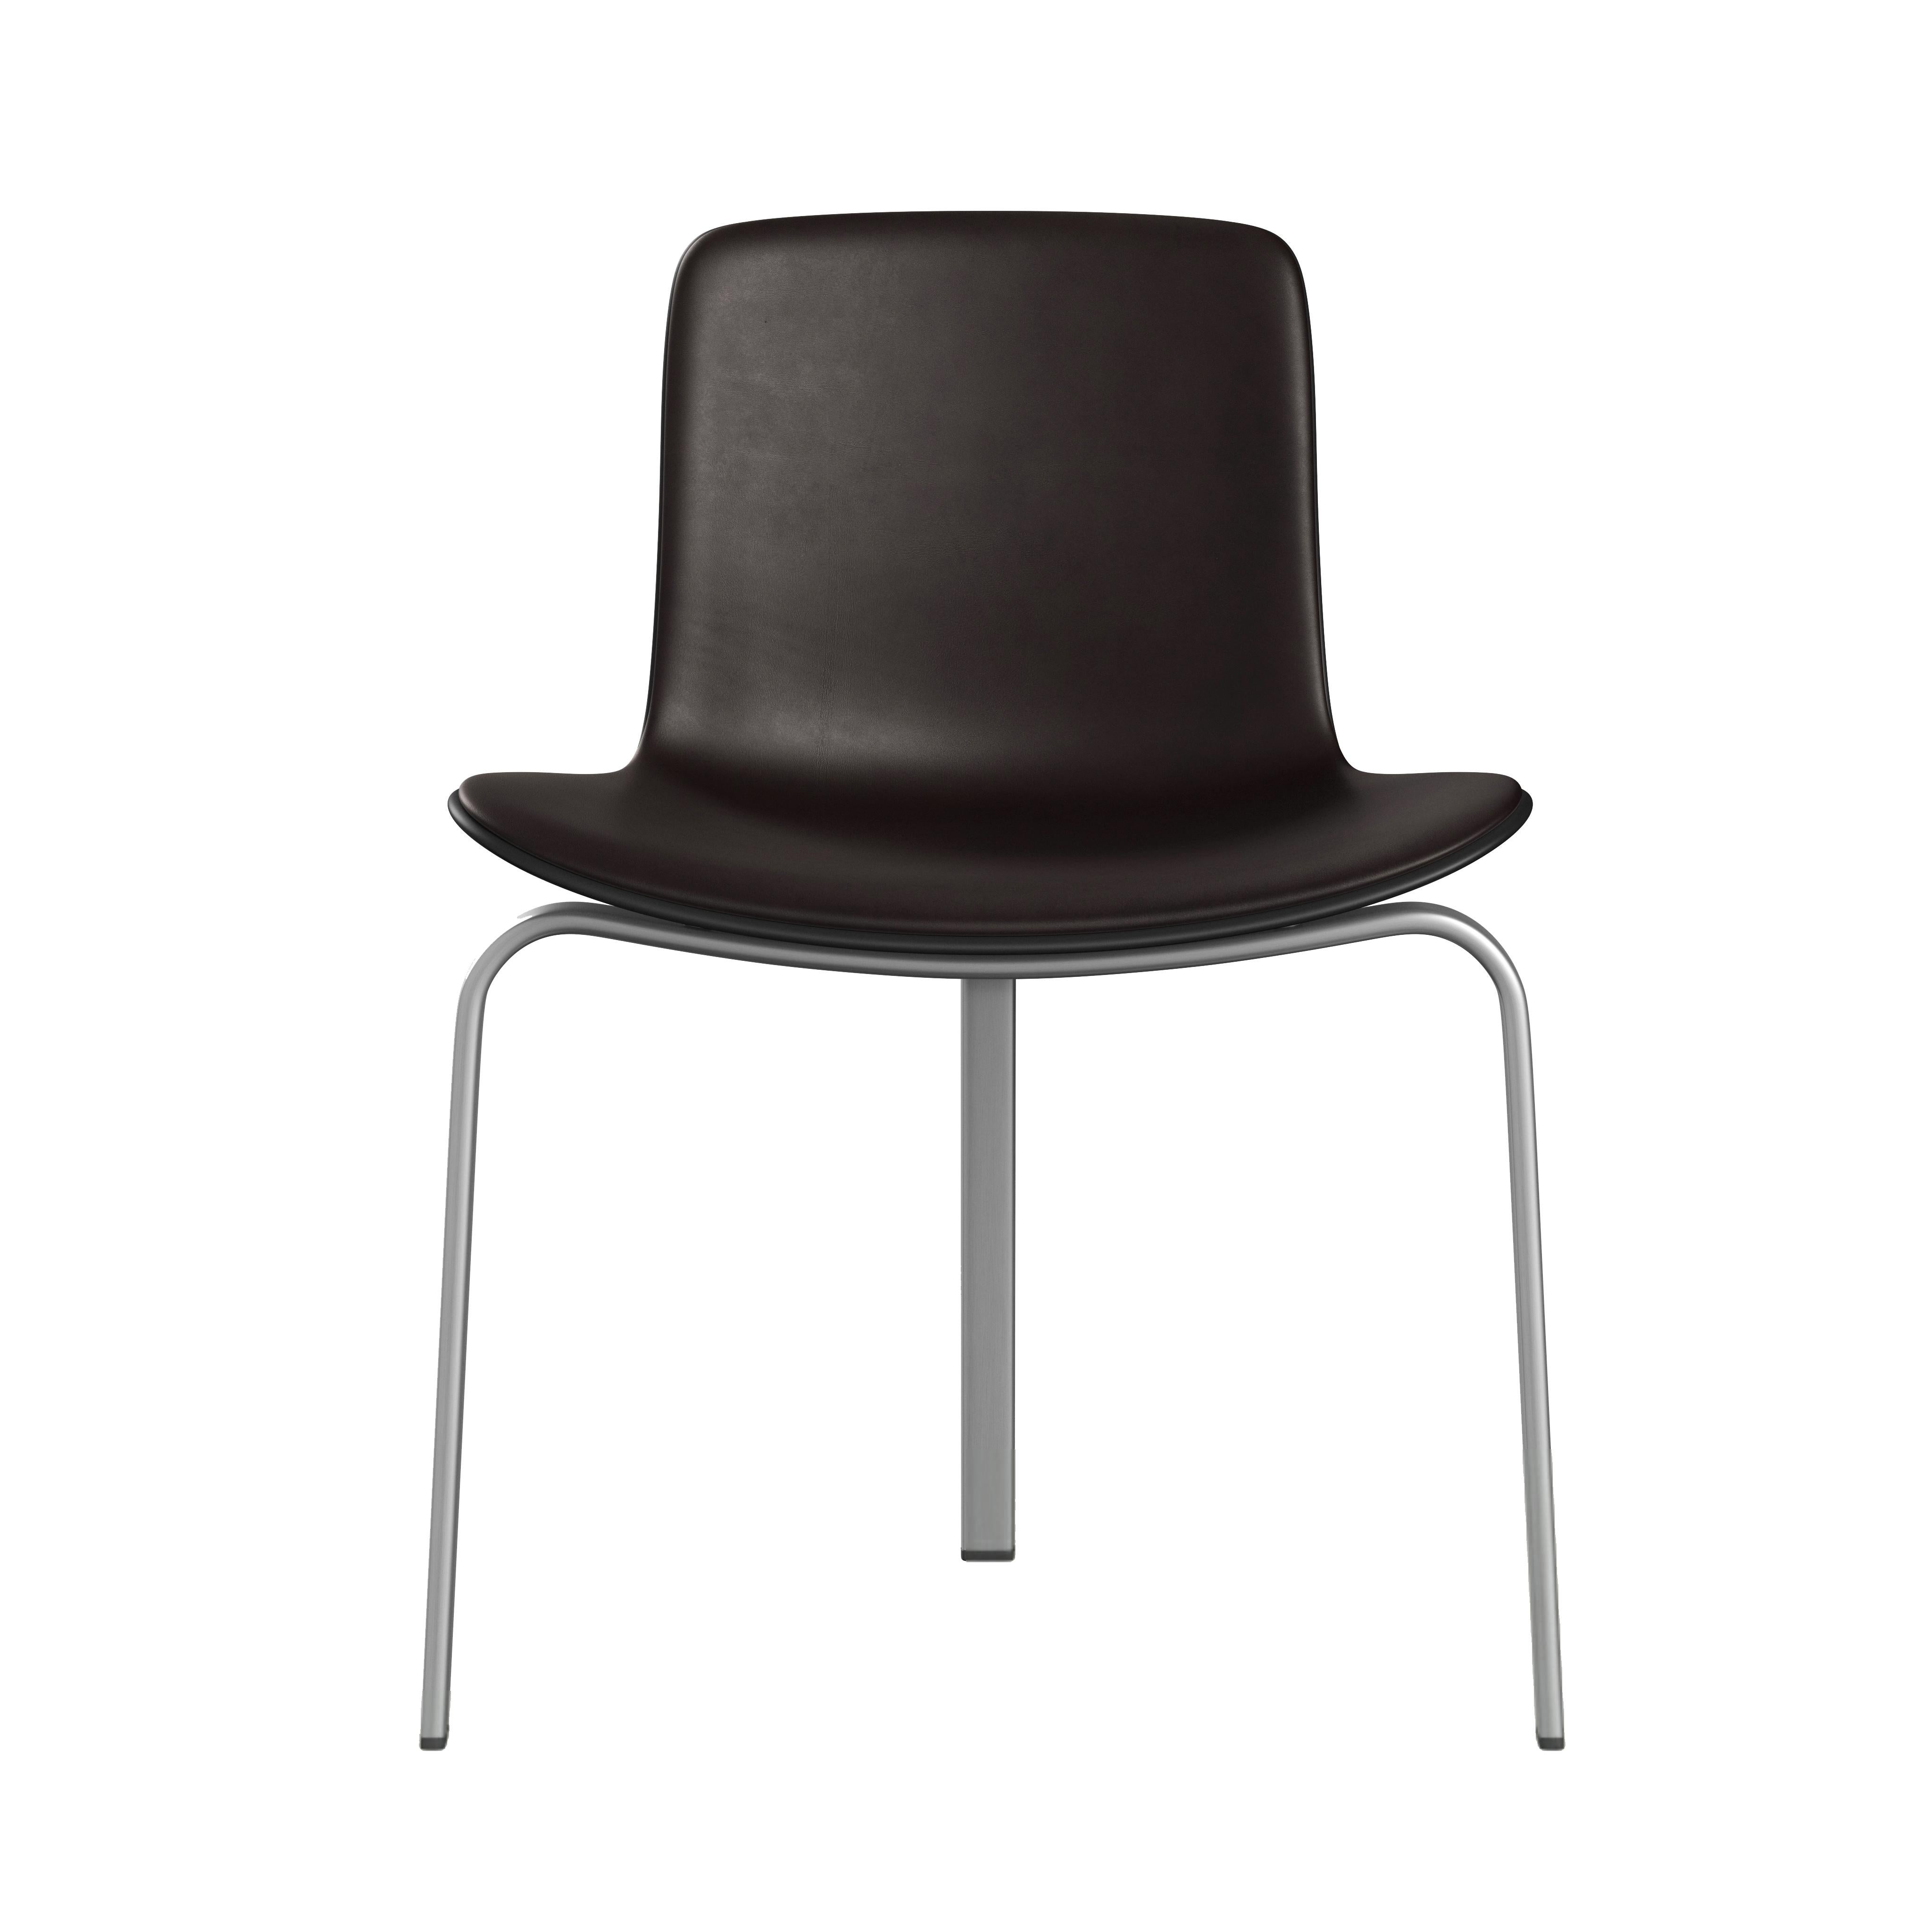 Poul Kjærholm 'PK8' Dining Chair for Fritz Hansen in Aura Leather Upholstery For Sale 8